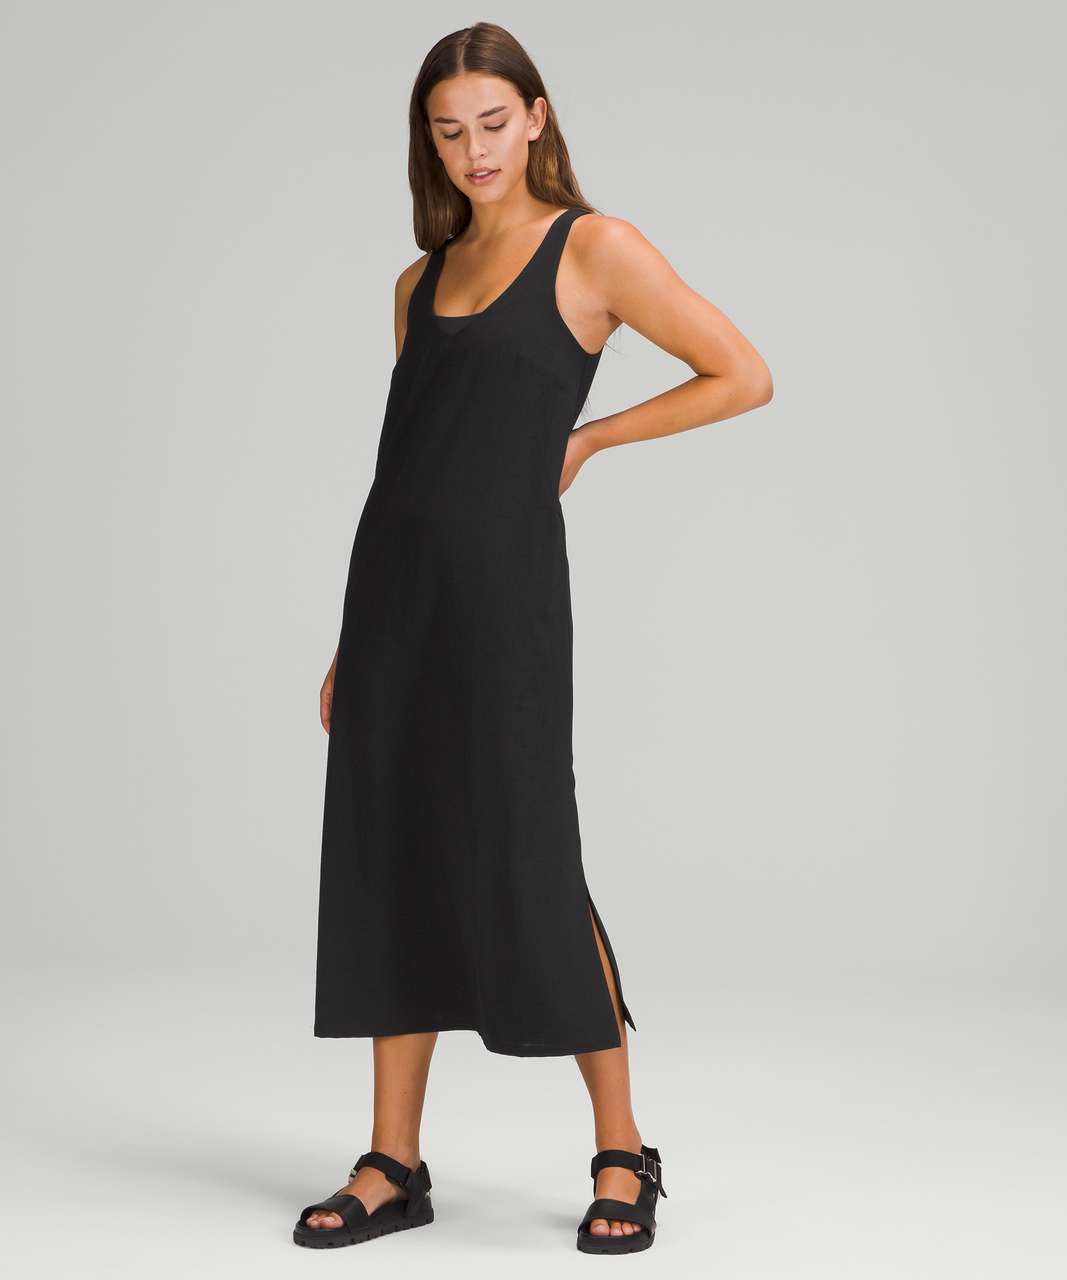 Sexy Black Dress - V-Neckline Dress - Scallop Edge Dress - LBD - Lulus